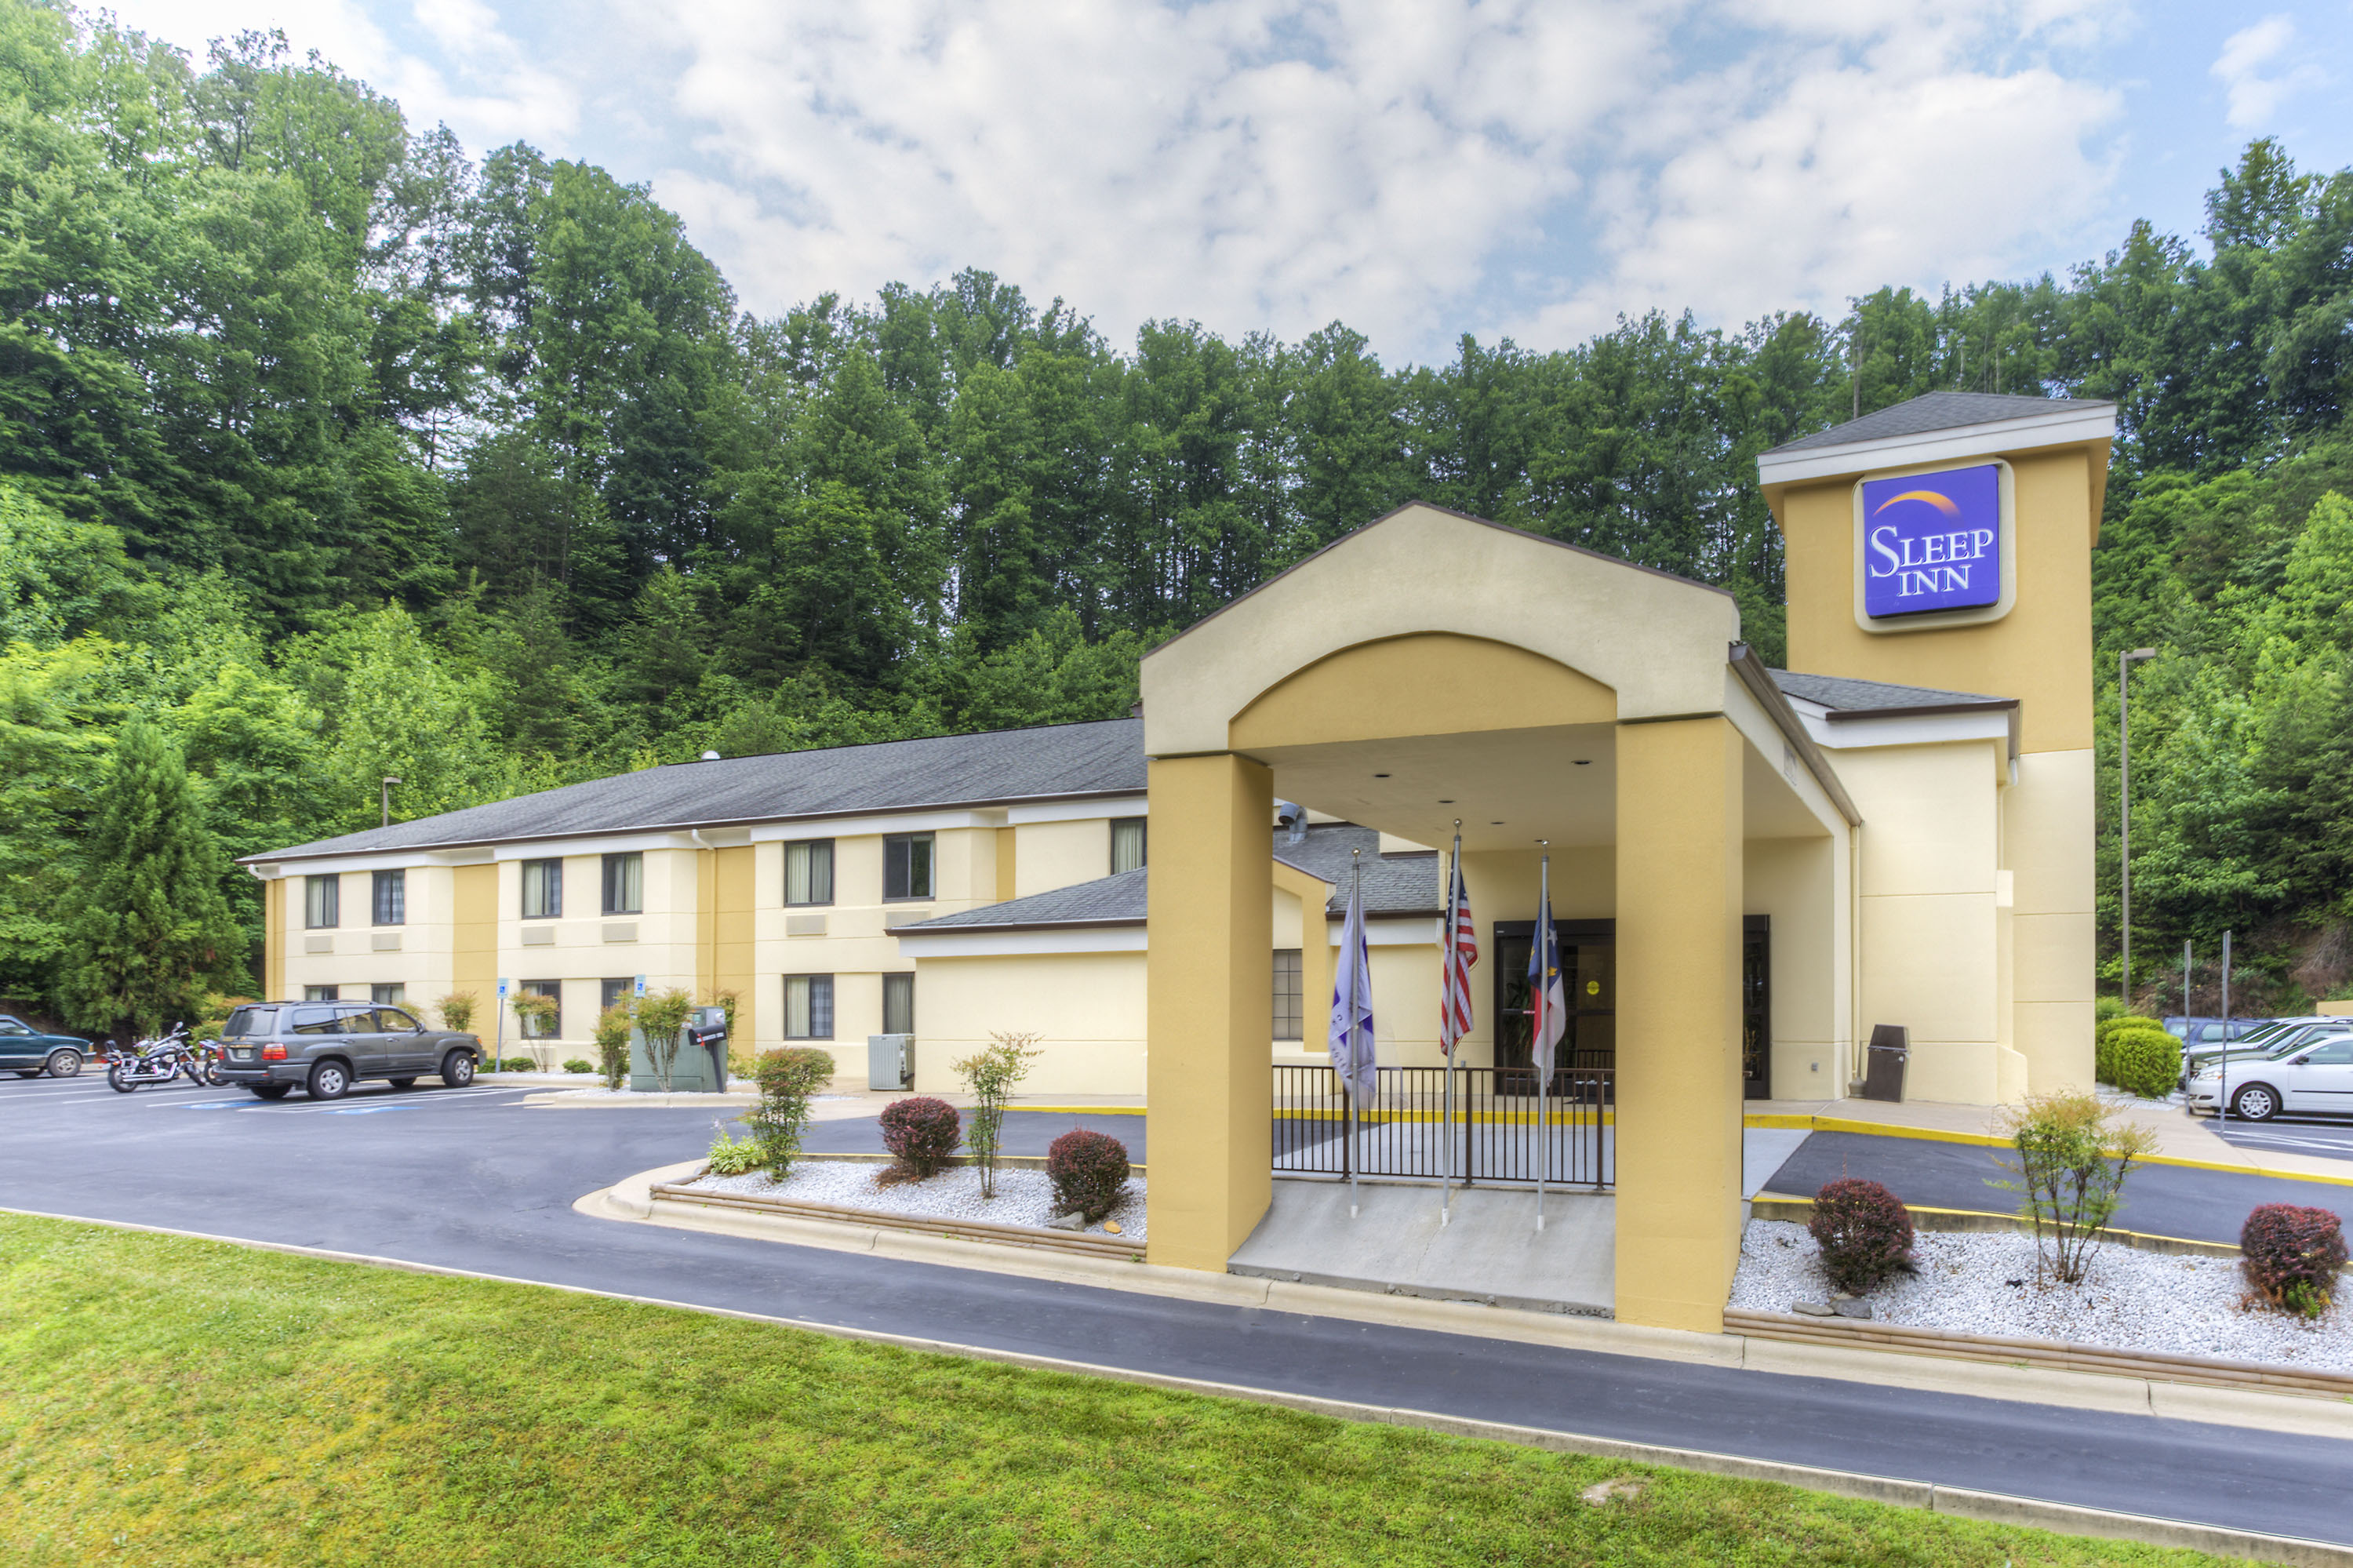 Sleep Inn Bryson City Cherokee Area Hotel, Bryson City Blue Ridge Parkway  Hotel